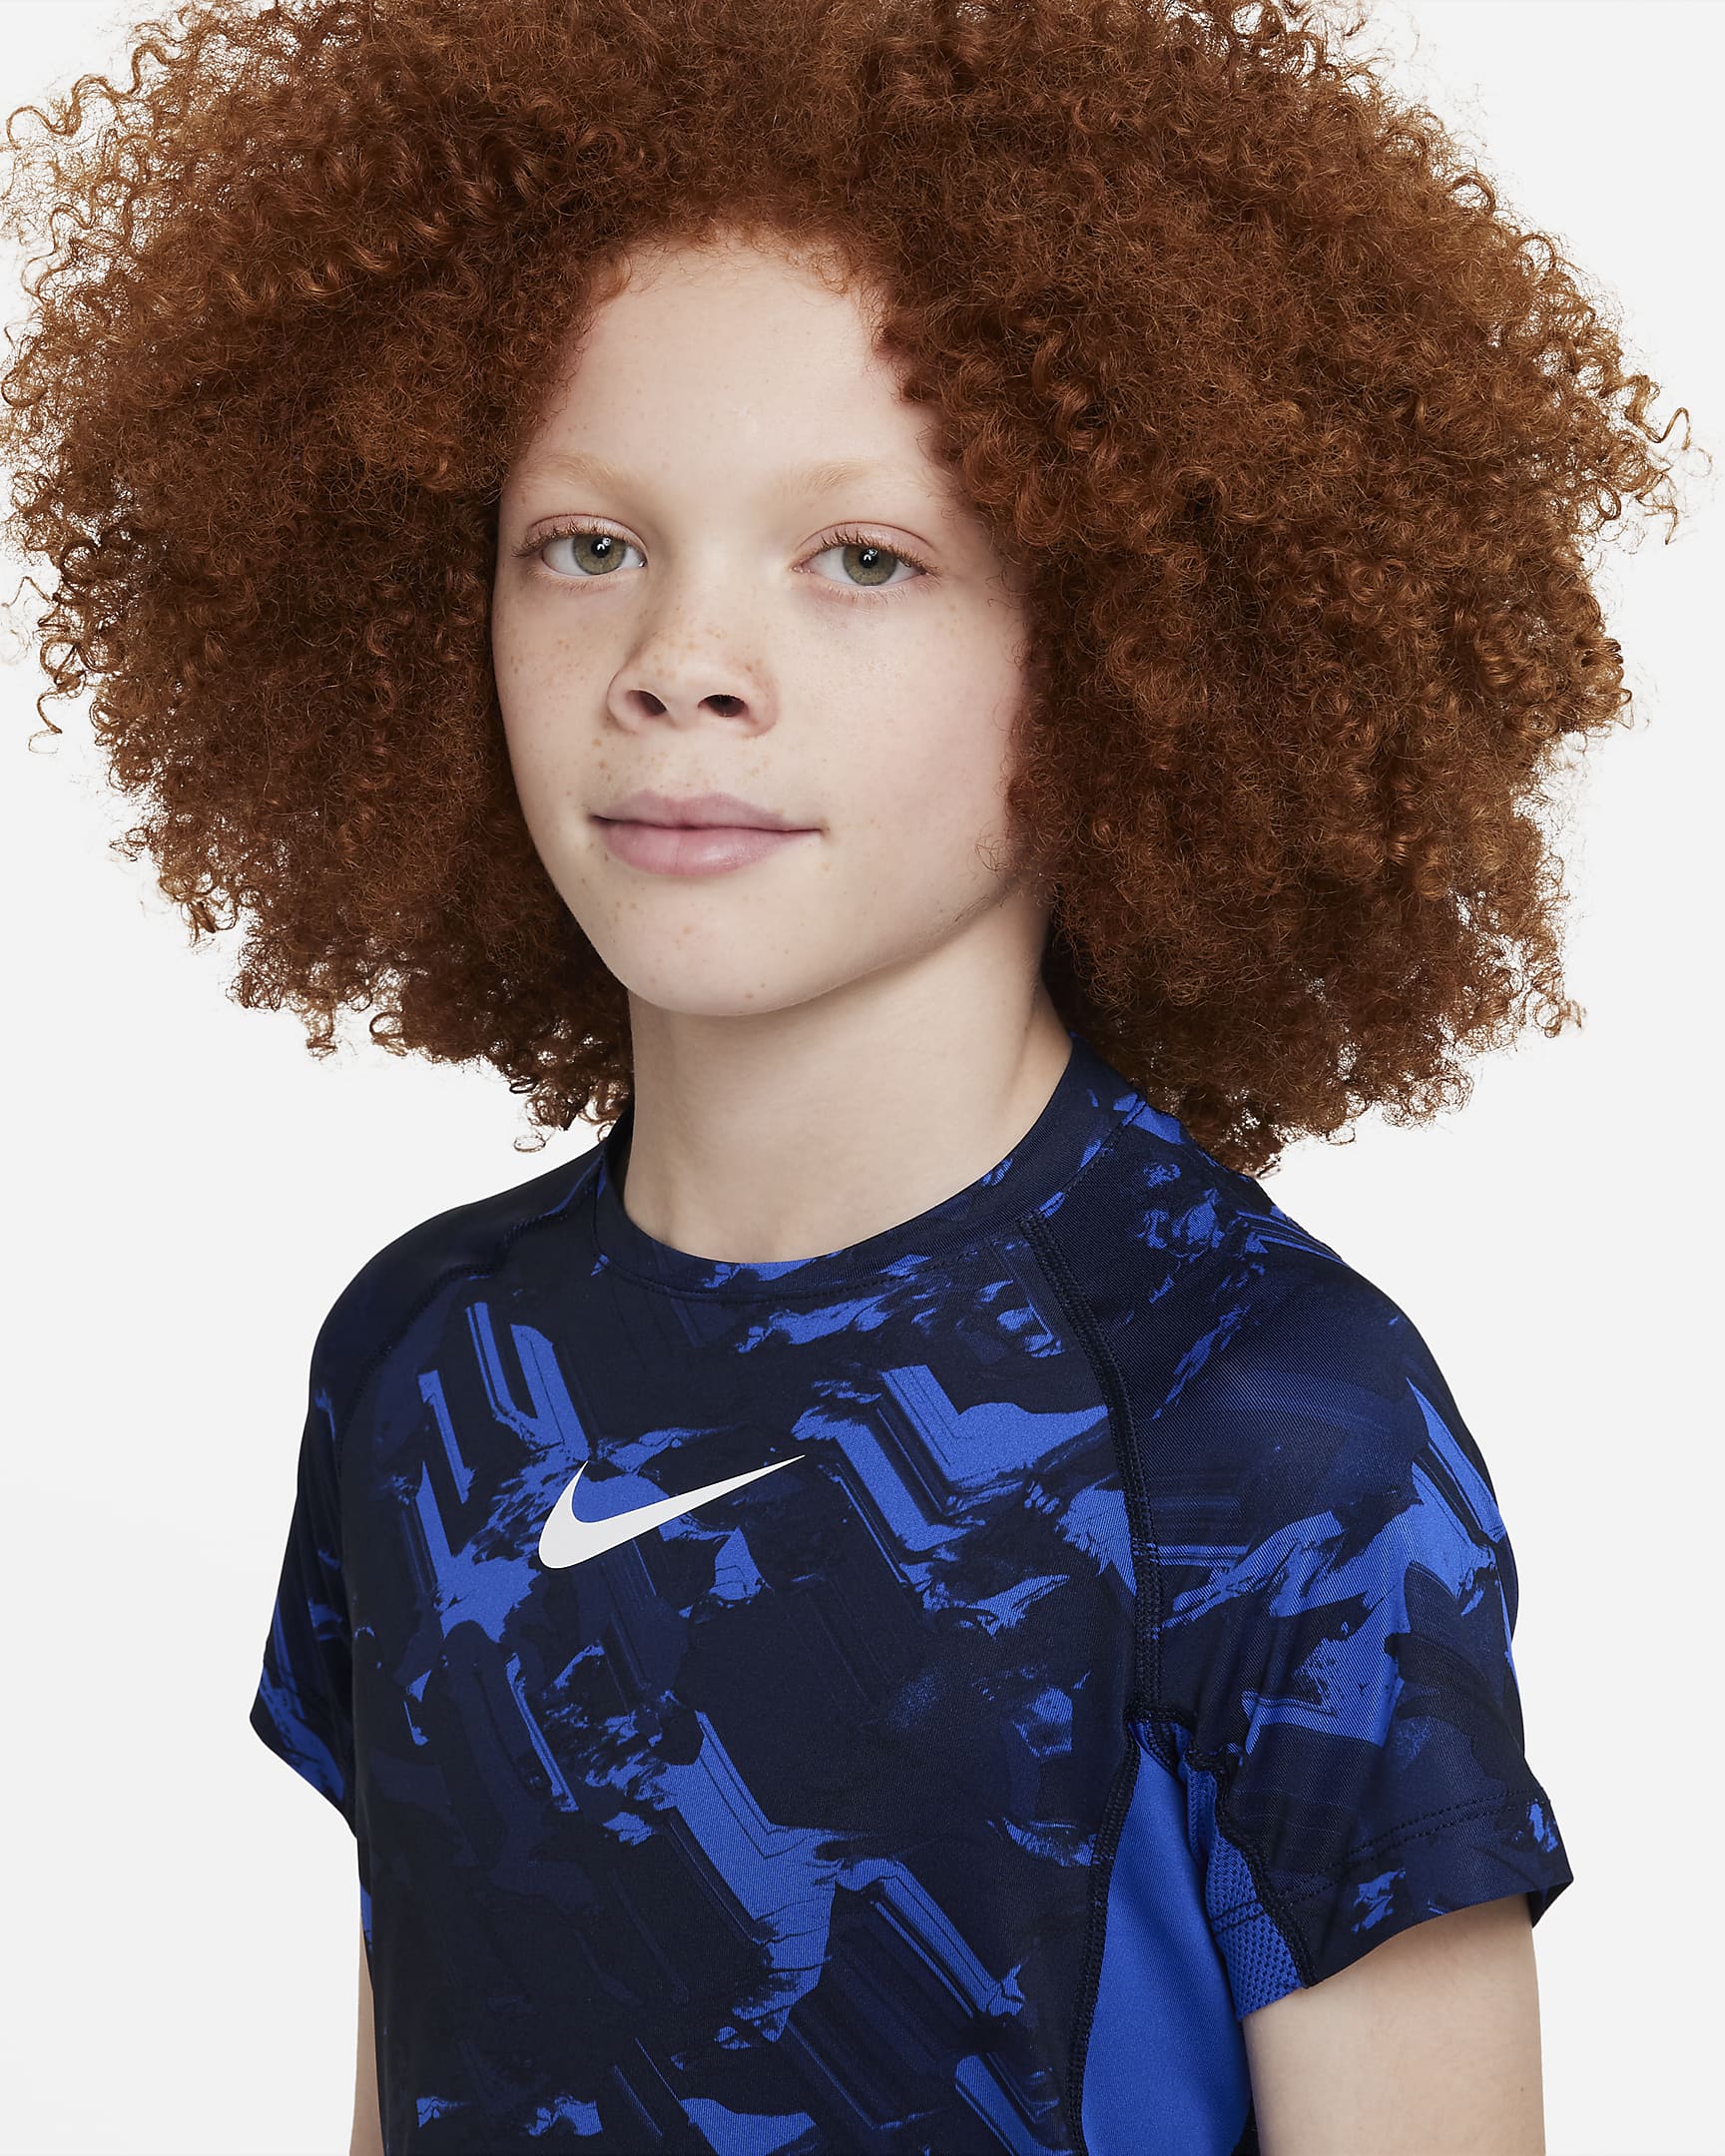 Nike Pro Dri-FIT Big Kids' (Boys') Training Top. Nike.com